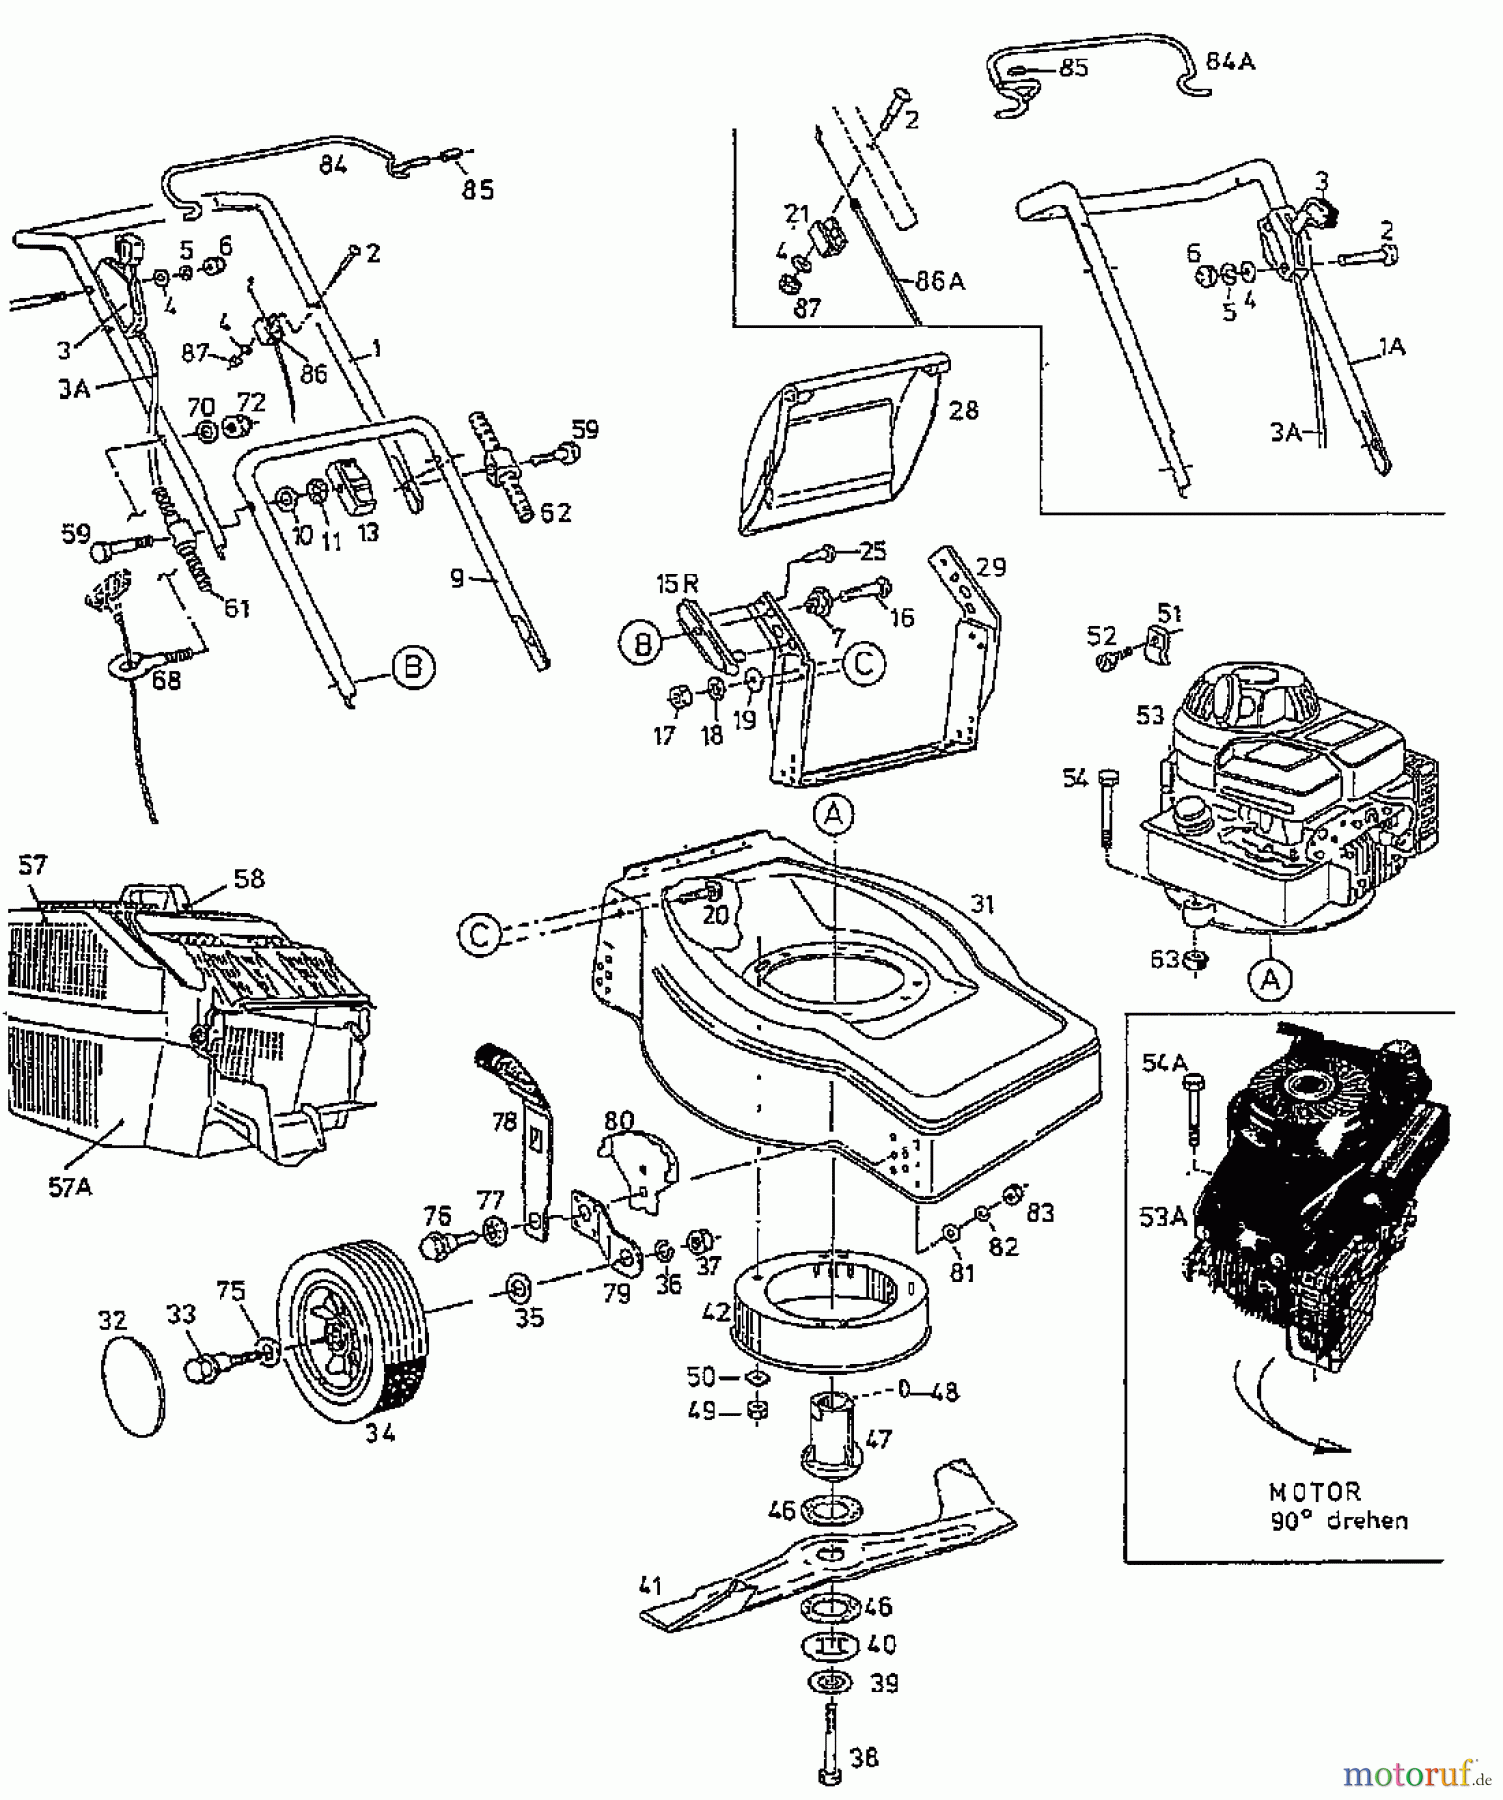  Golf Petrol mower Golf HBL 5 04074.02  (1997) Basic machine